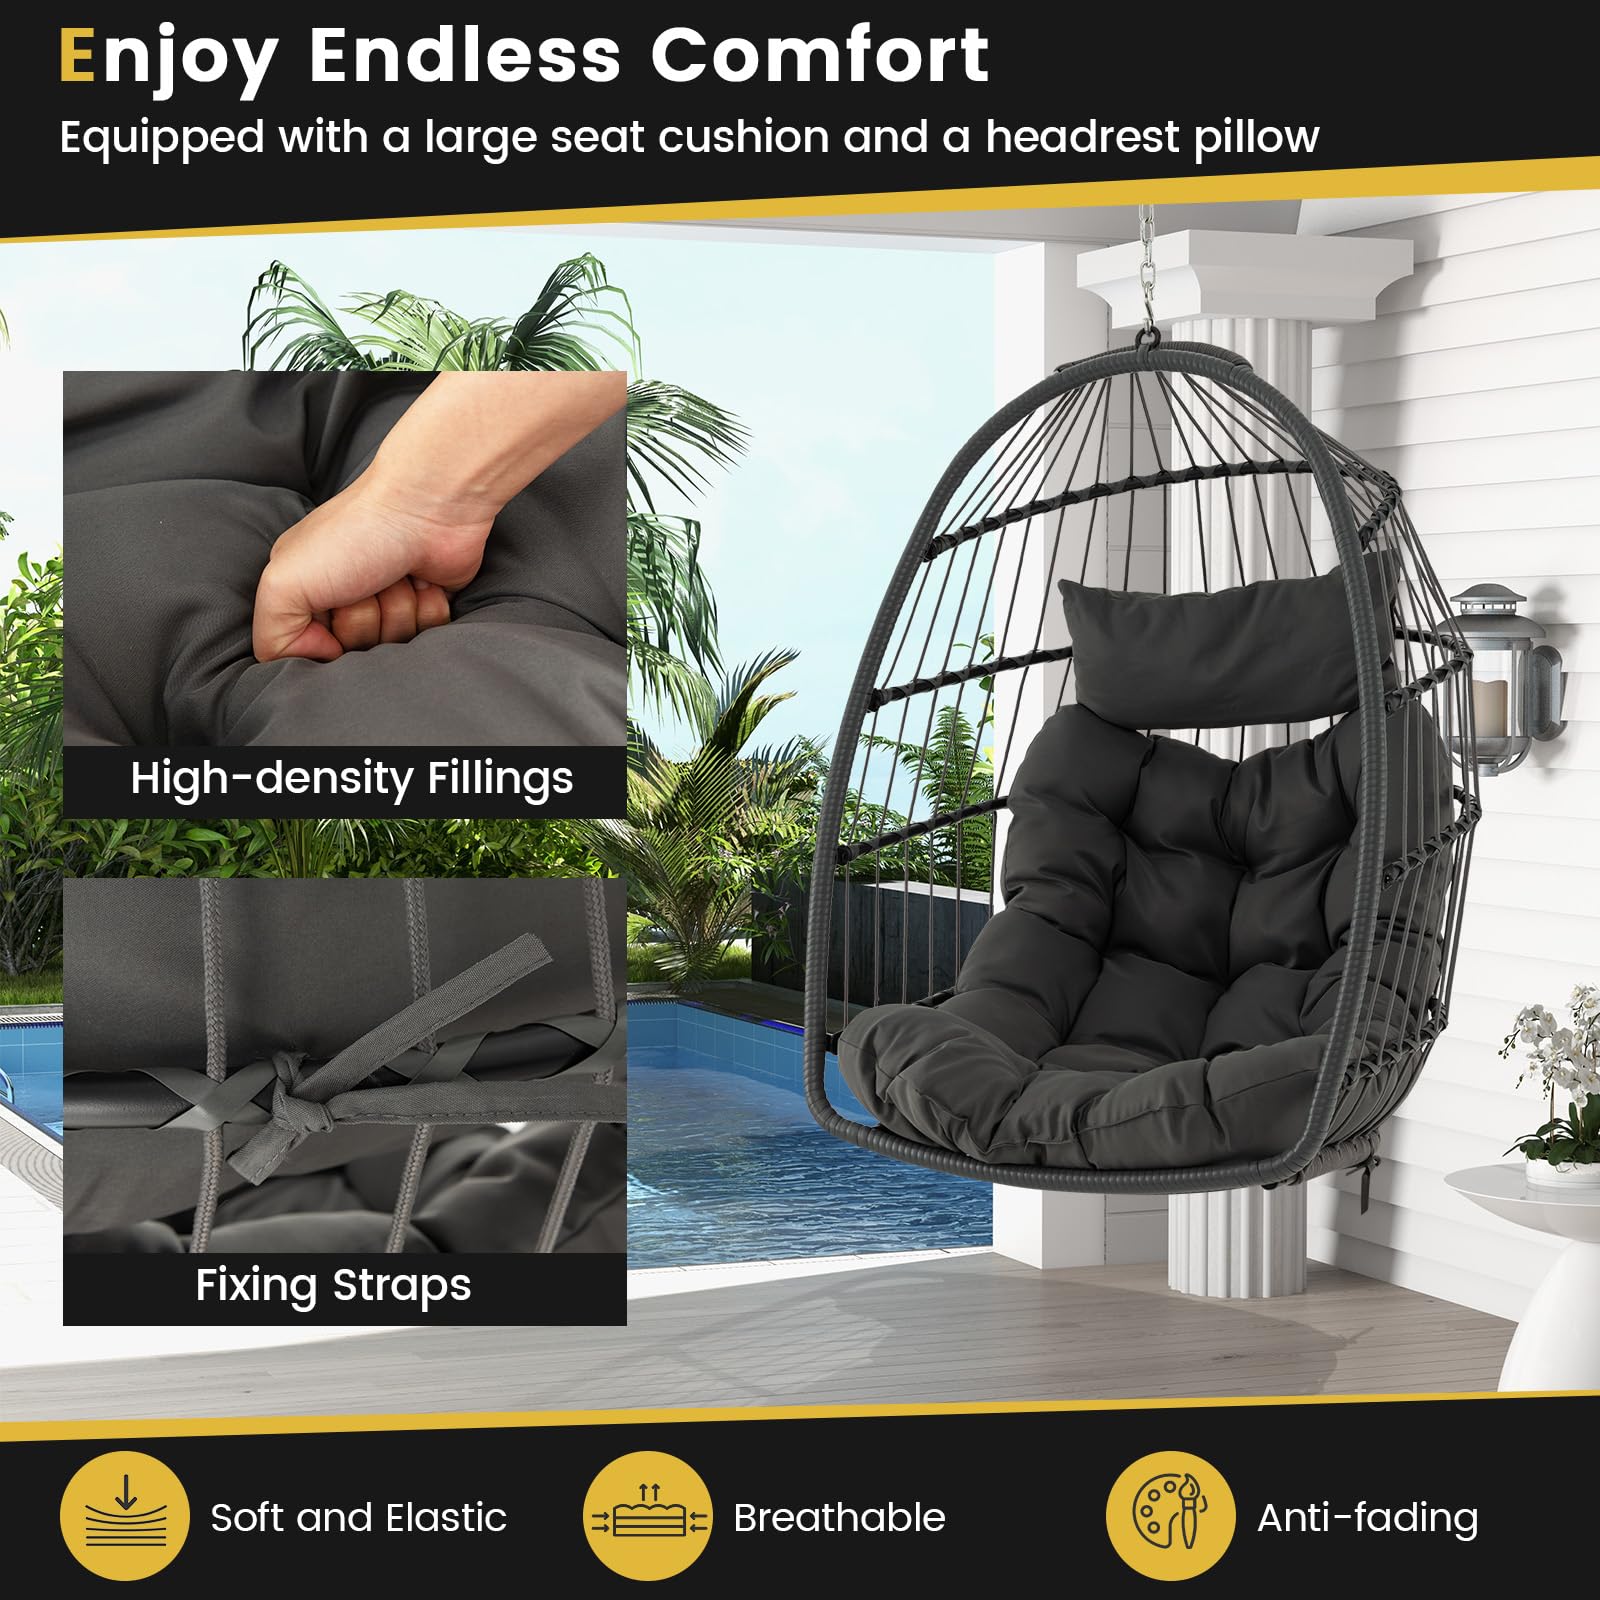 Giantex Foldable Hanging Egg Chair - Egg Swing Hammock Chair